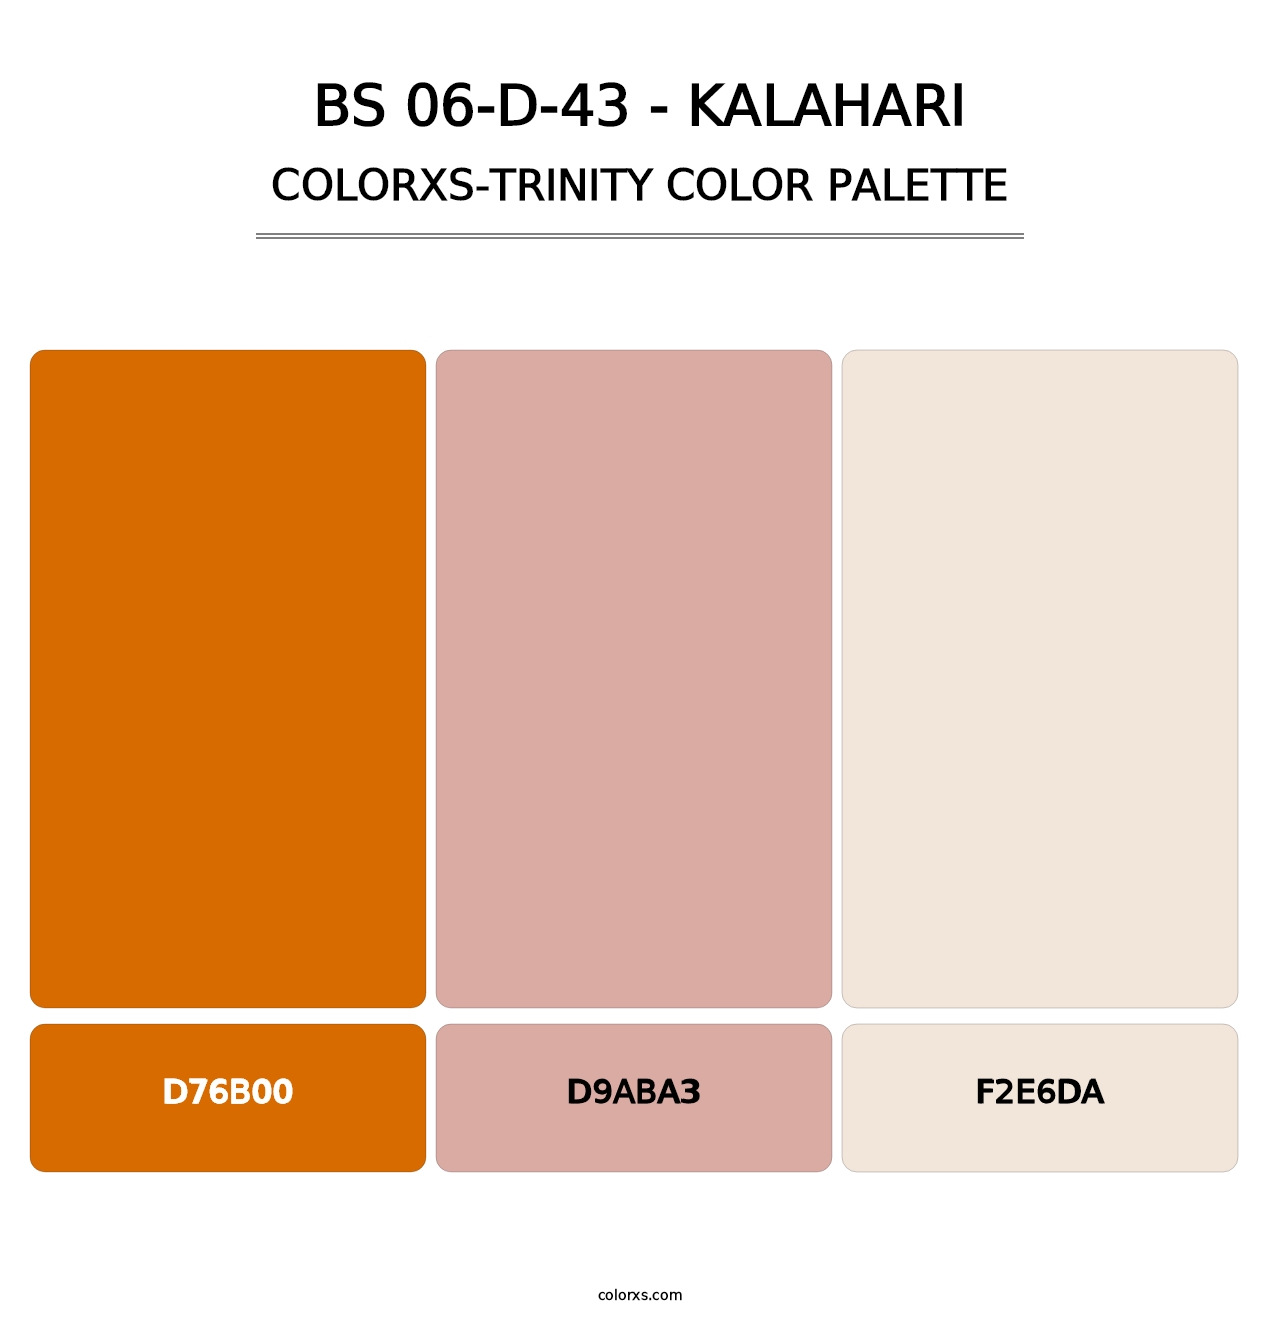 BS 06-D-43 - Kalahari - Colorxs Trinity Palette